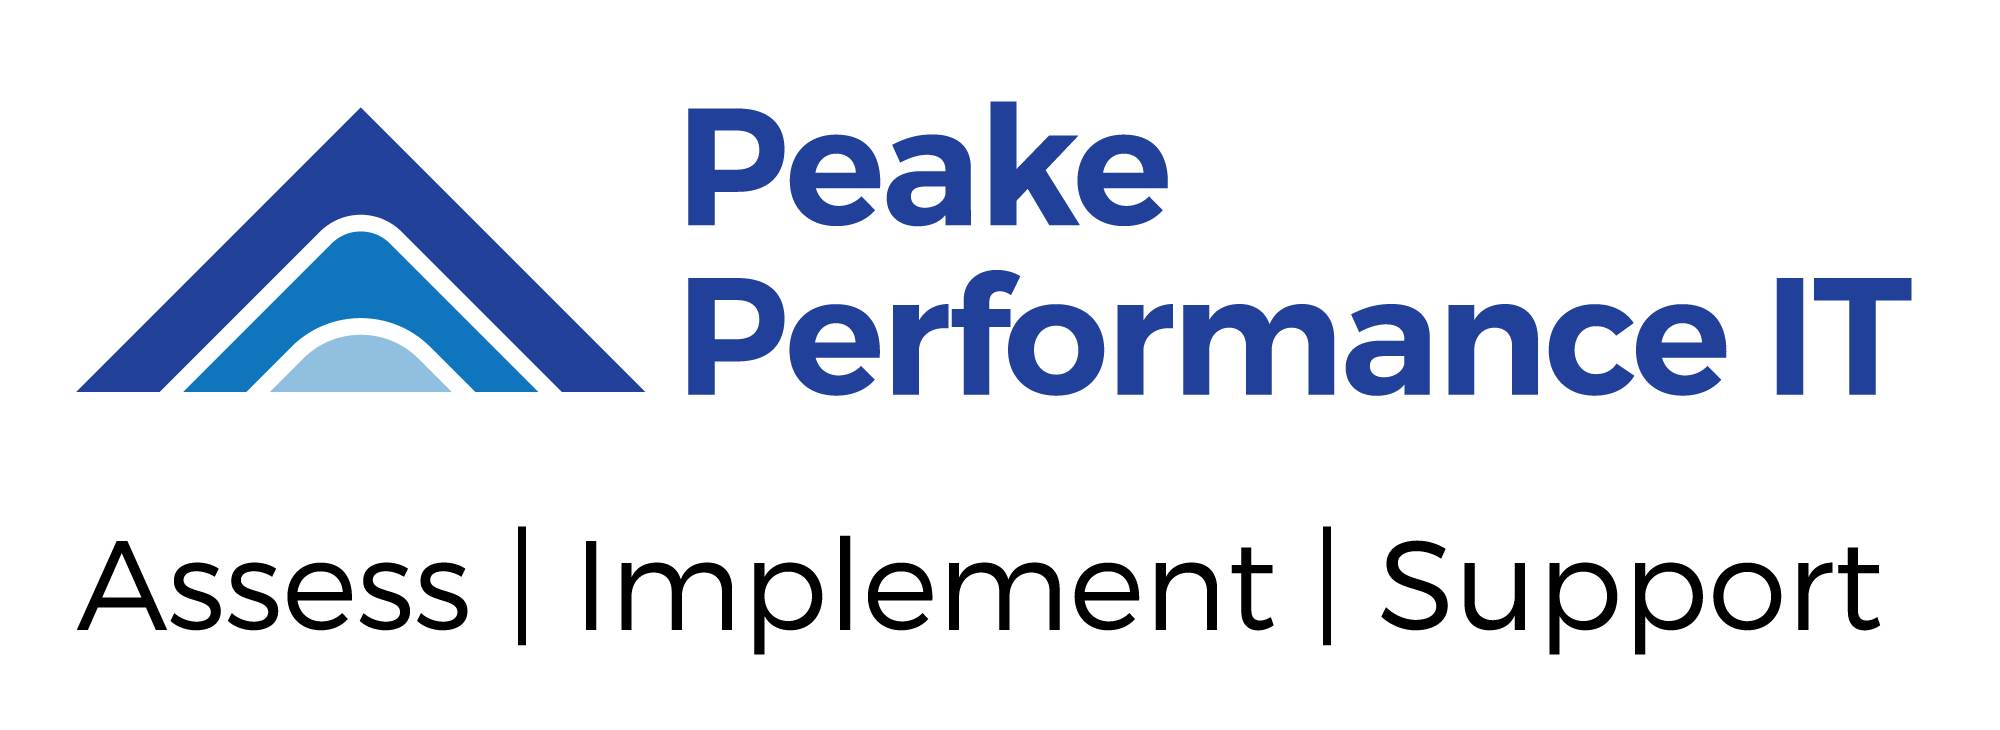 Peake Performance IT Corp.